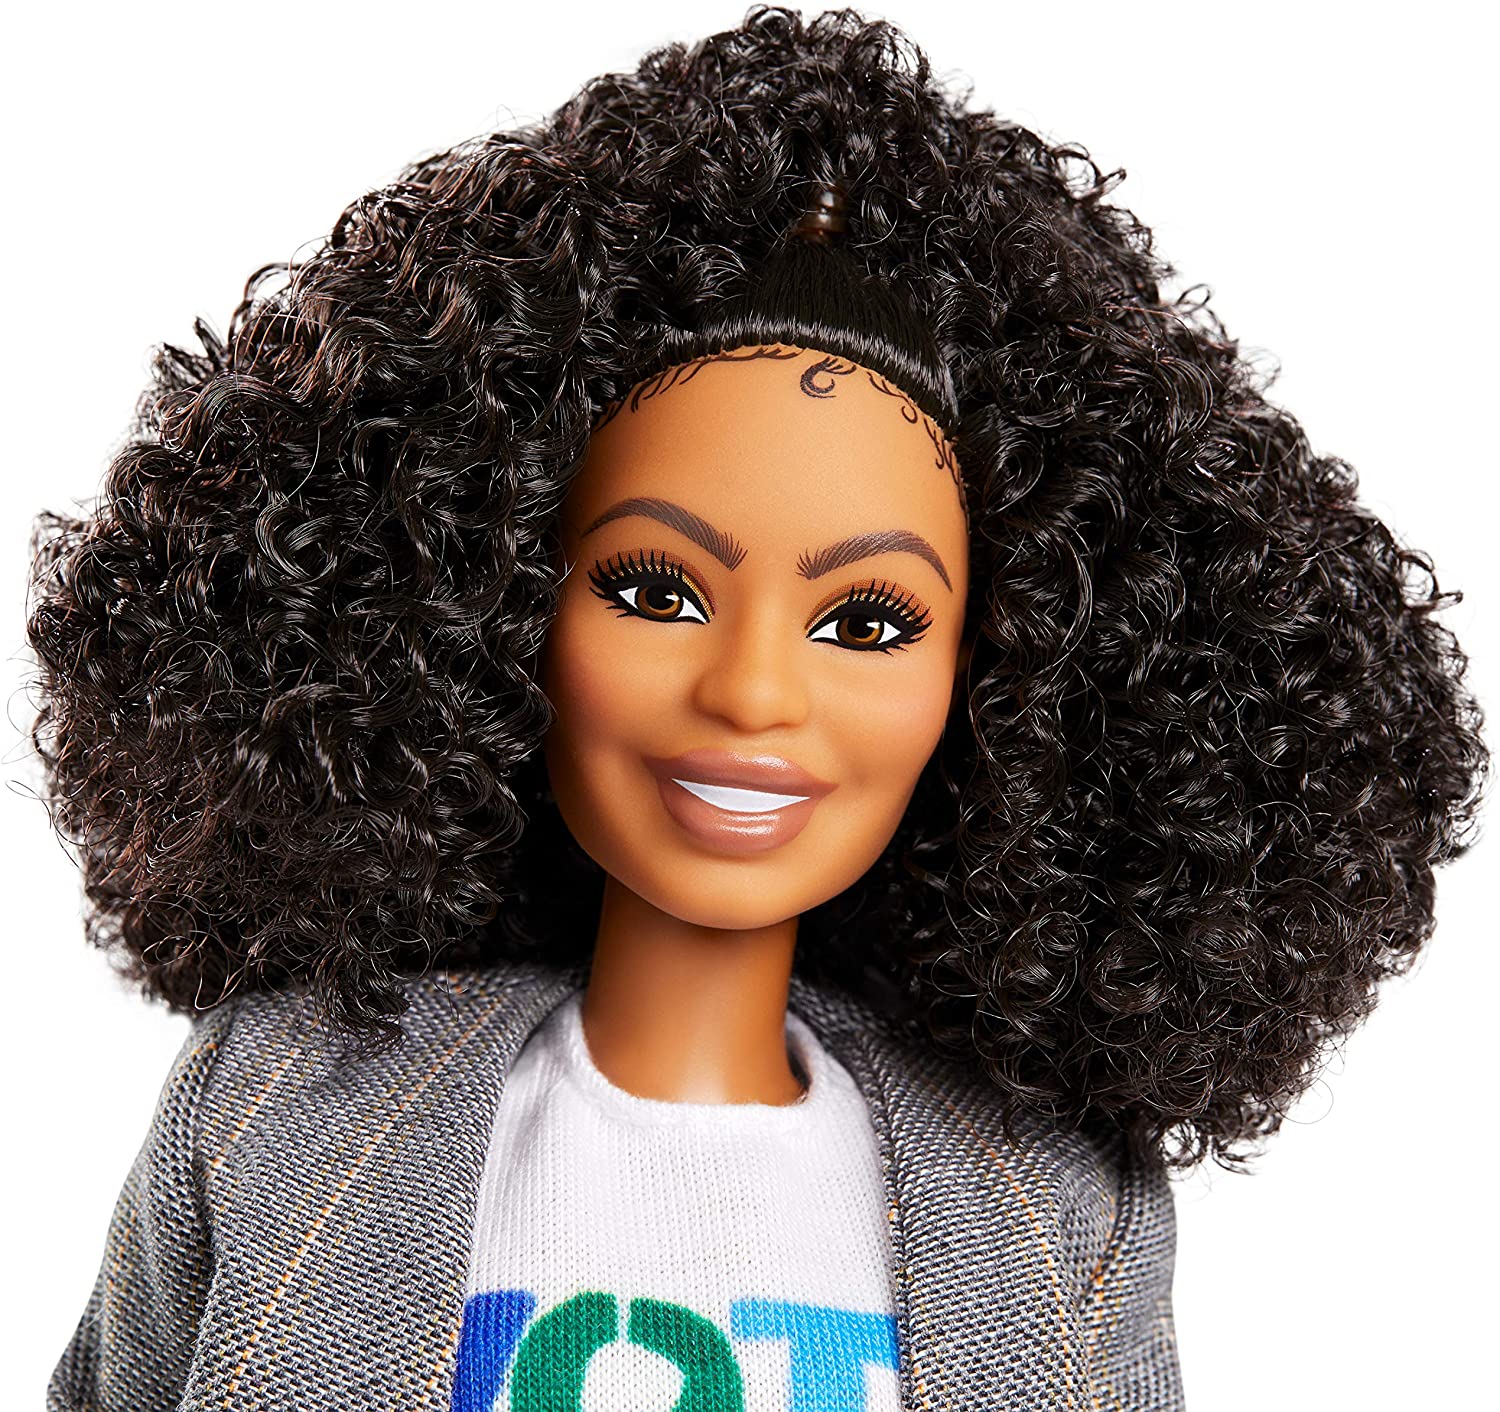 14 Black Women History Immortalized As Dolls